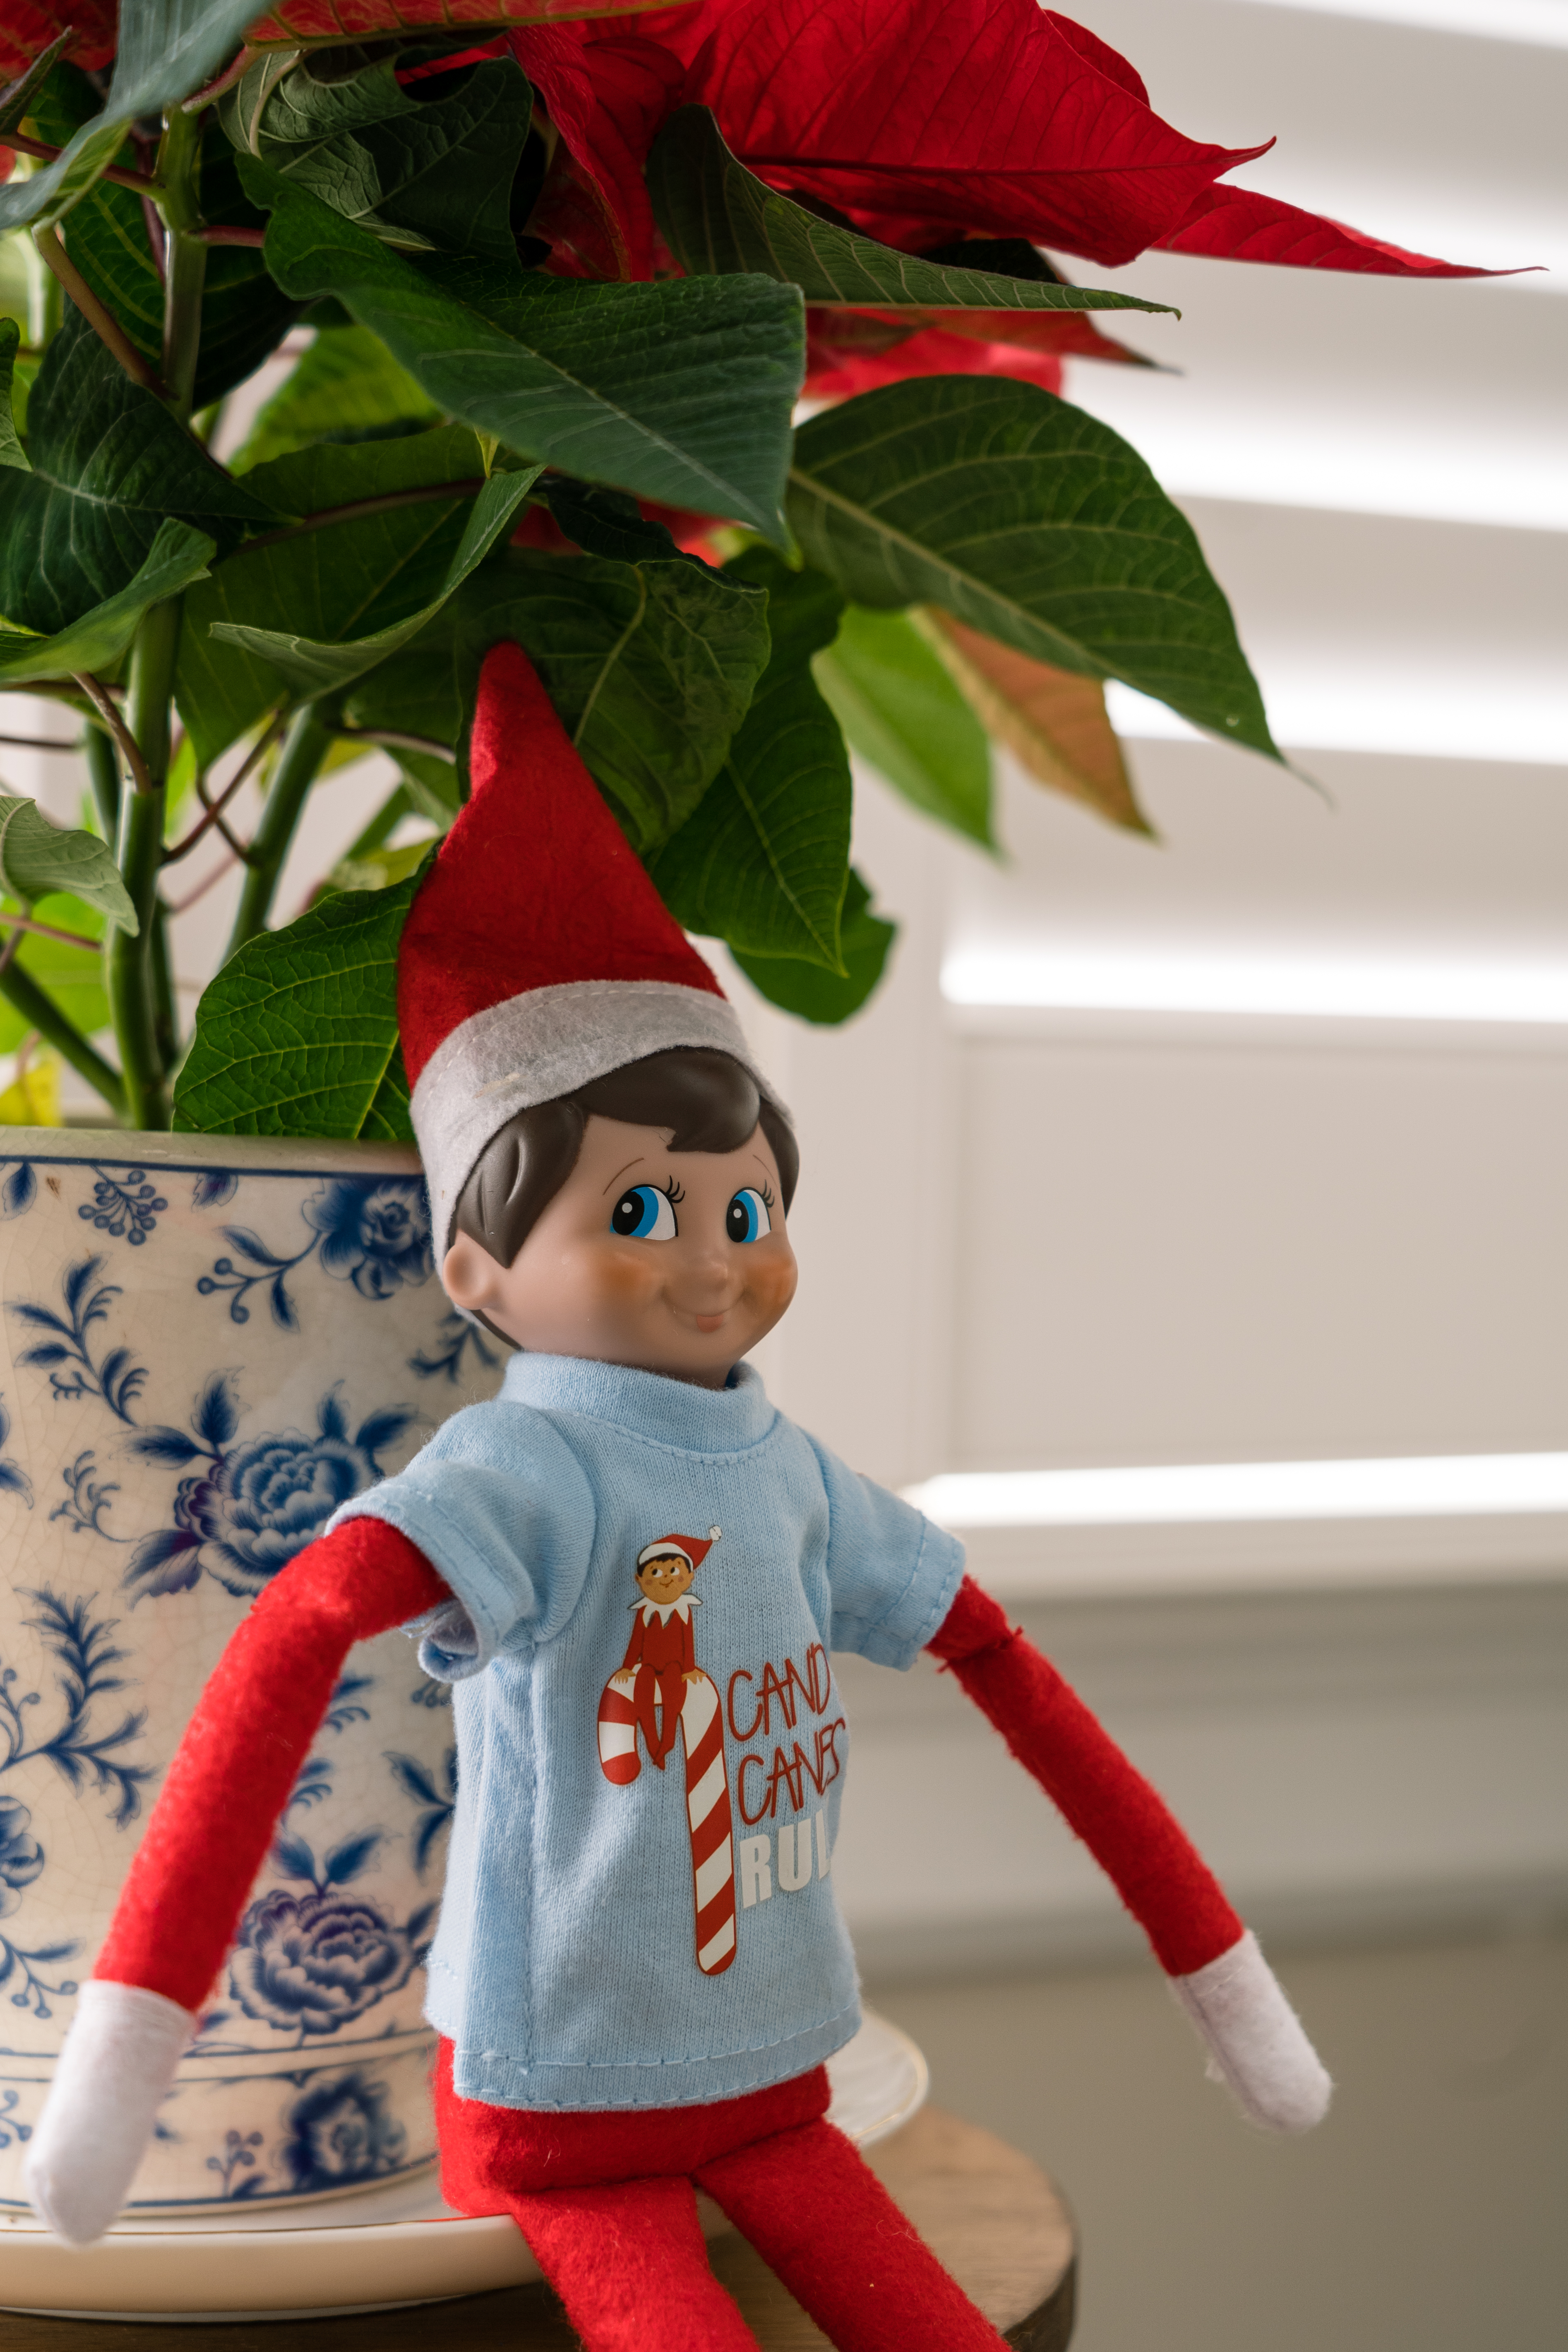 Elf on the shelf in a blue tee-shirt